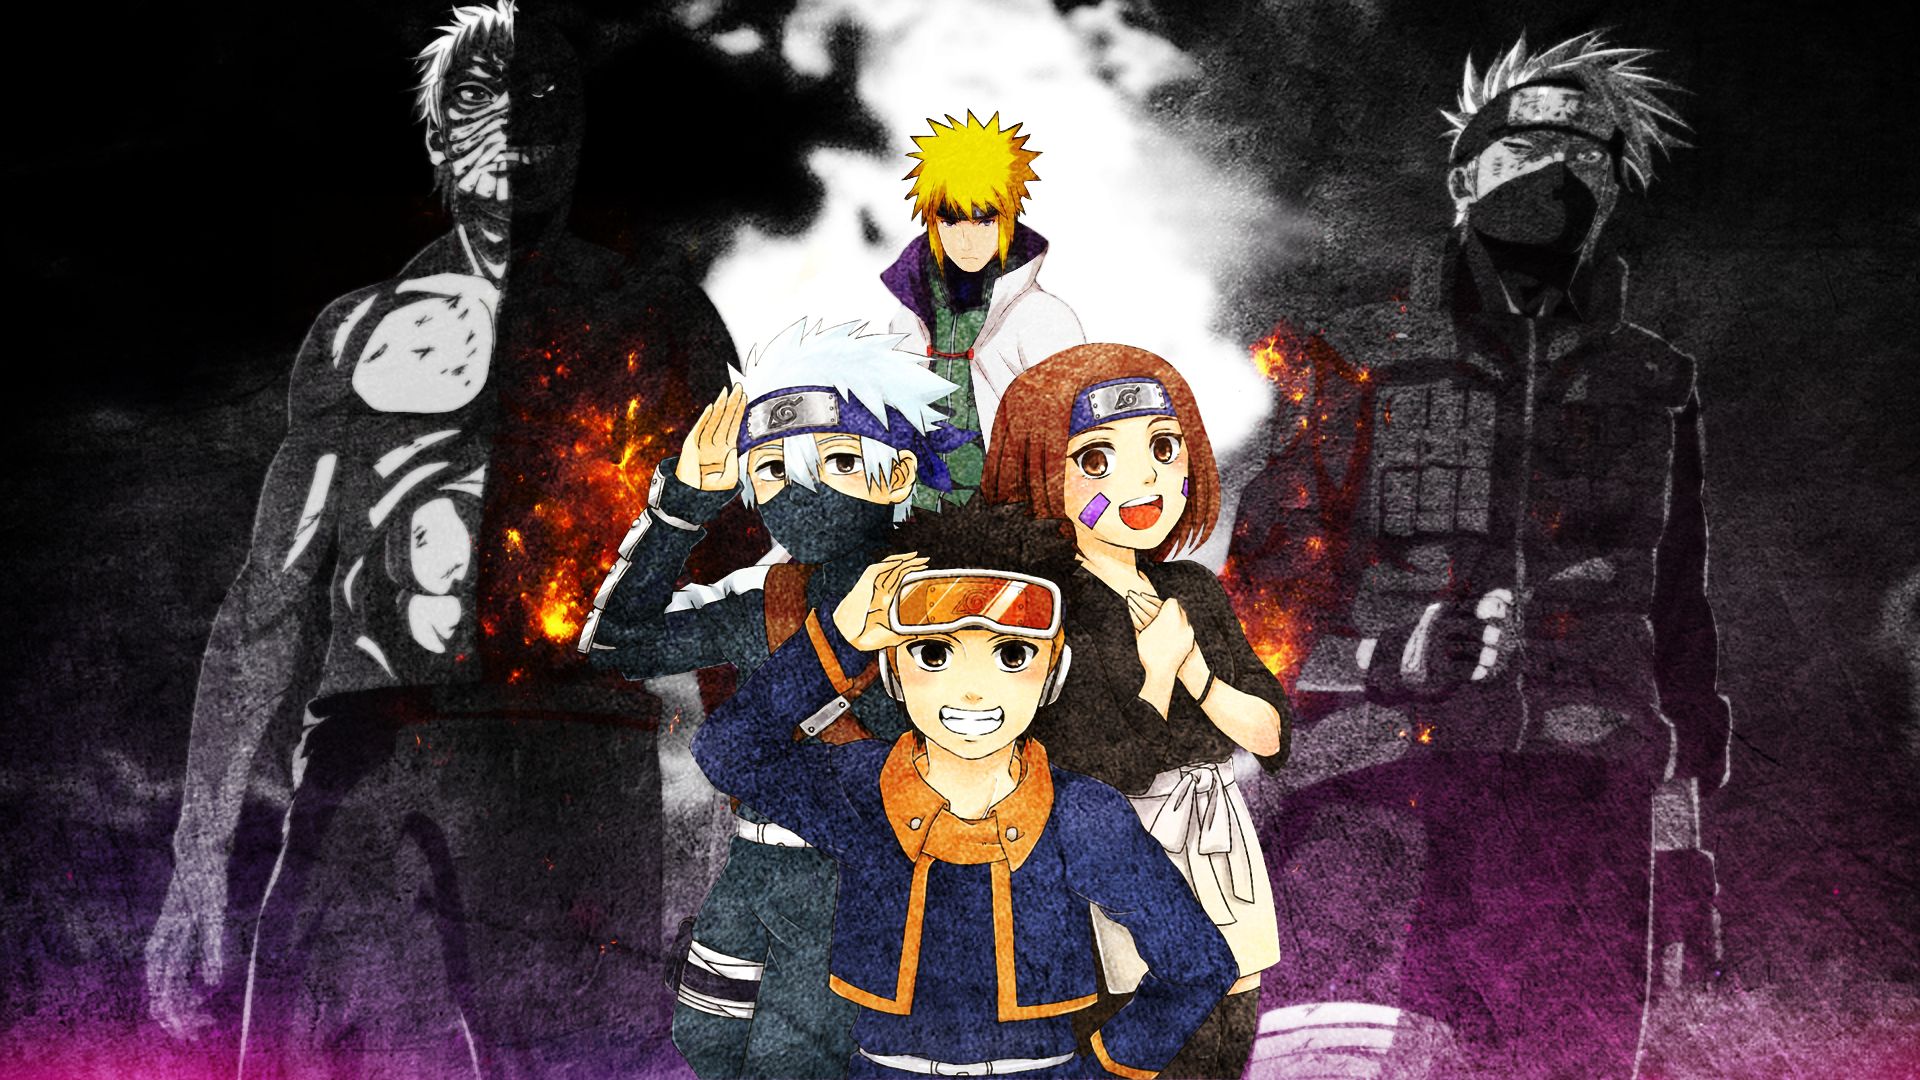 Baixar papel de parede para celular de Anime, Naruto gratuito.